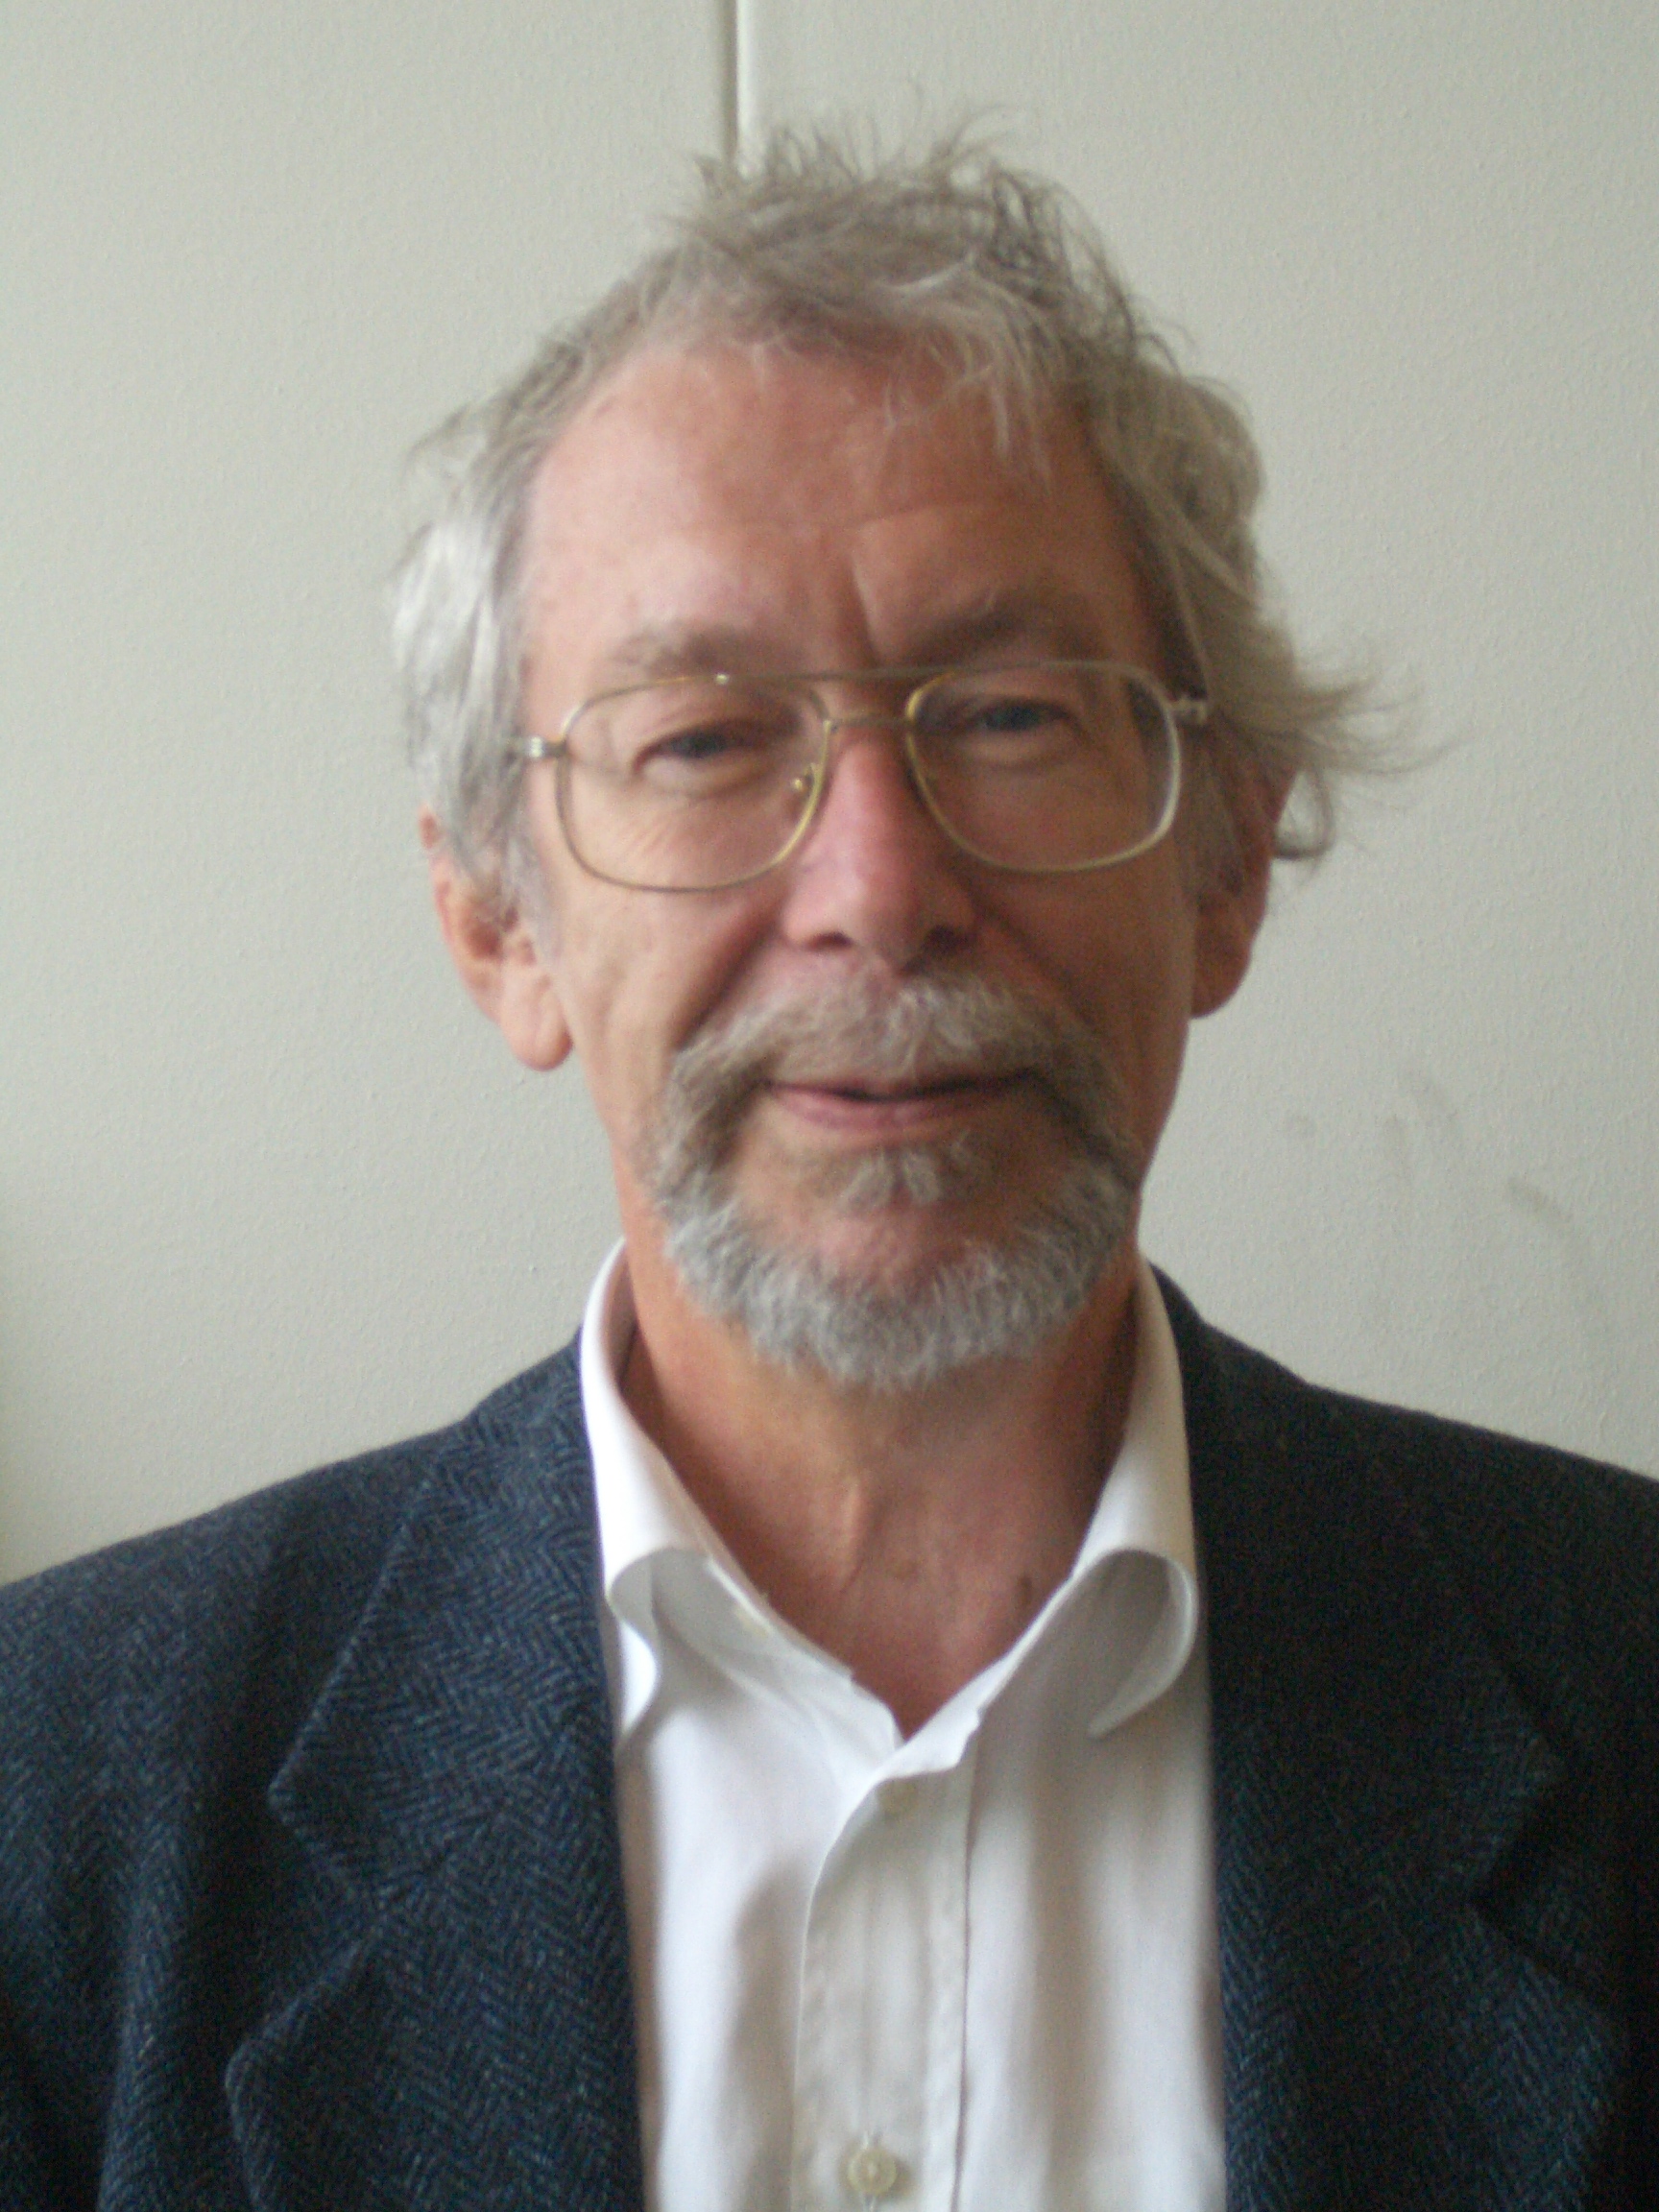 Profielfoto van prof. dr. A.J.M. (Ton) Schoot Uiterkamp